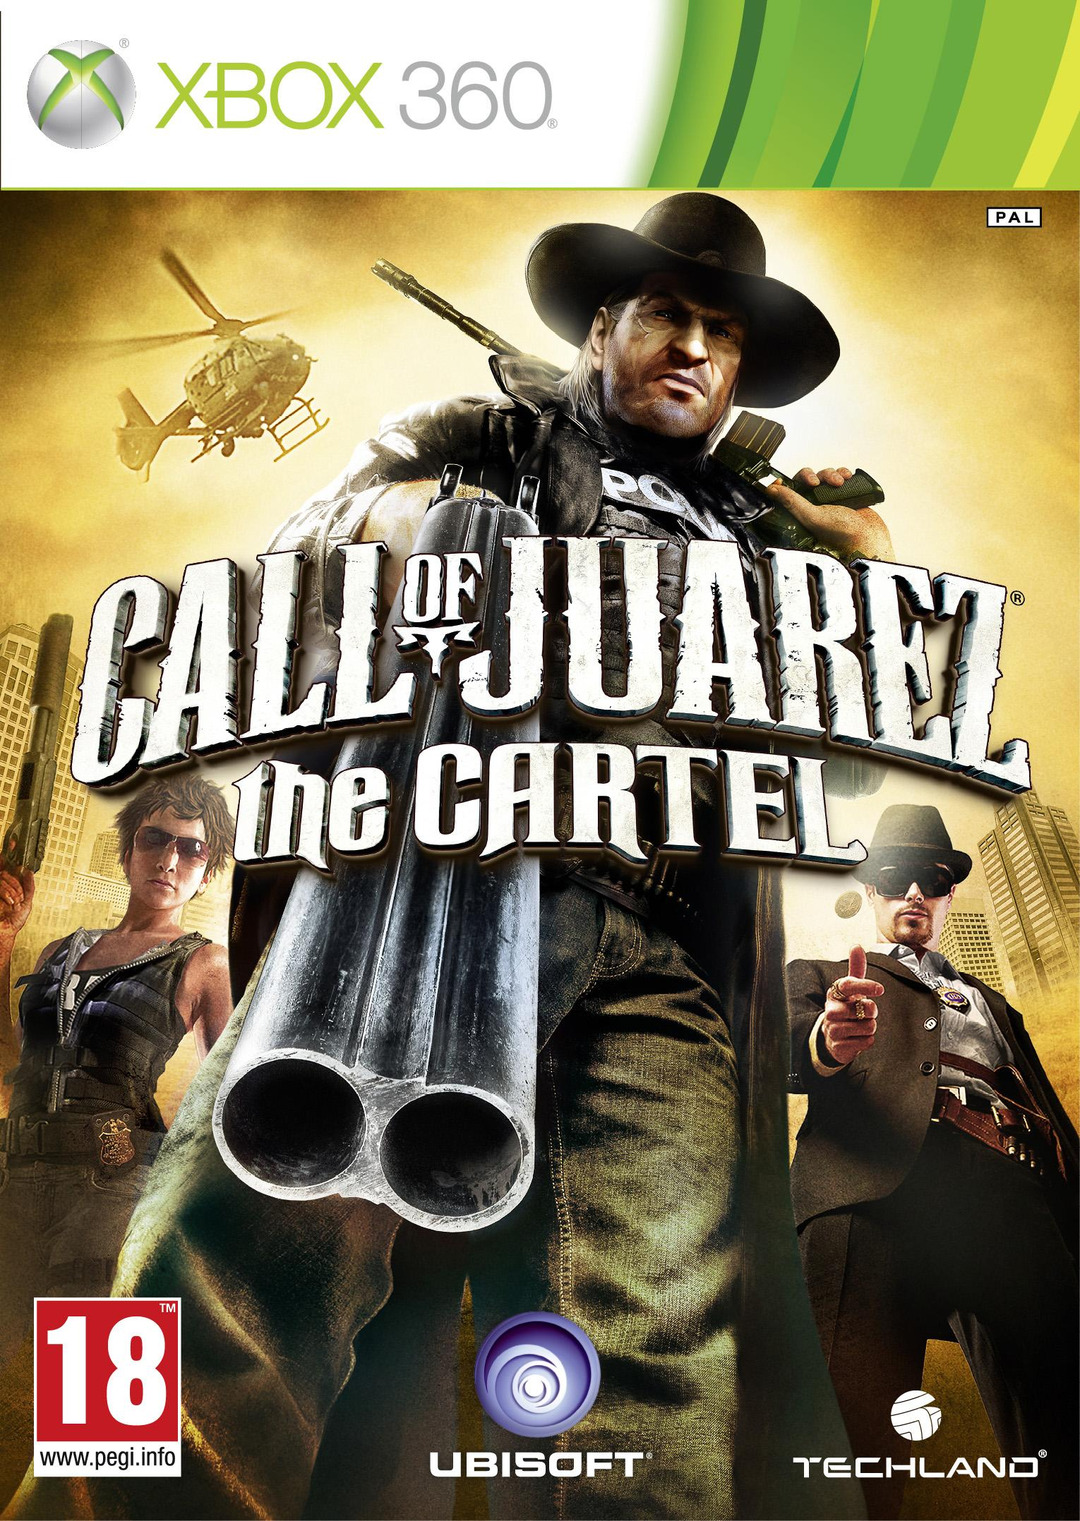 Call of juarez the cartel thema windows 7 problem